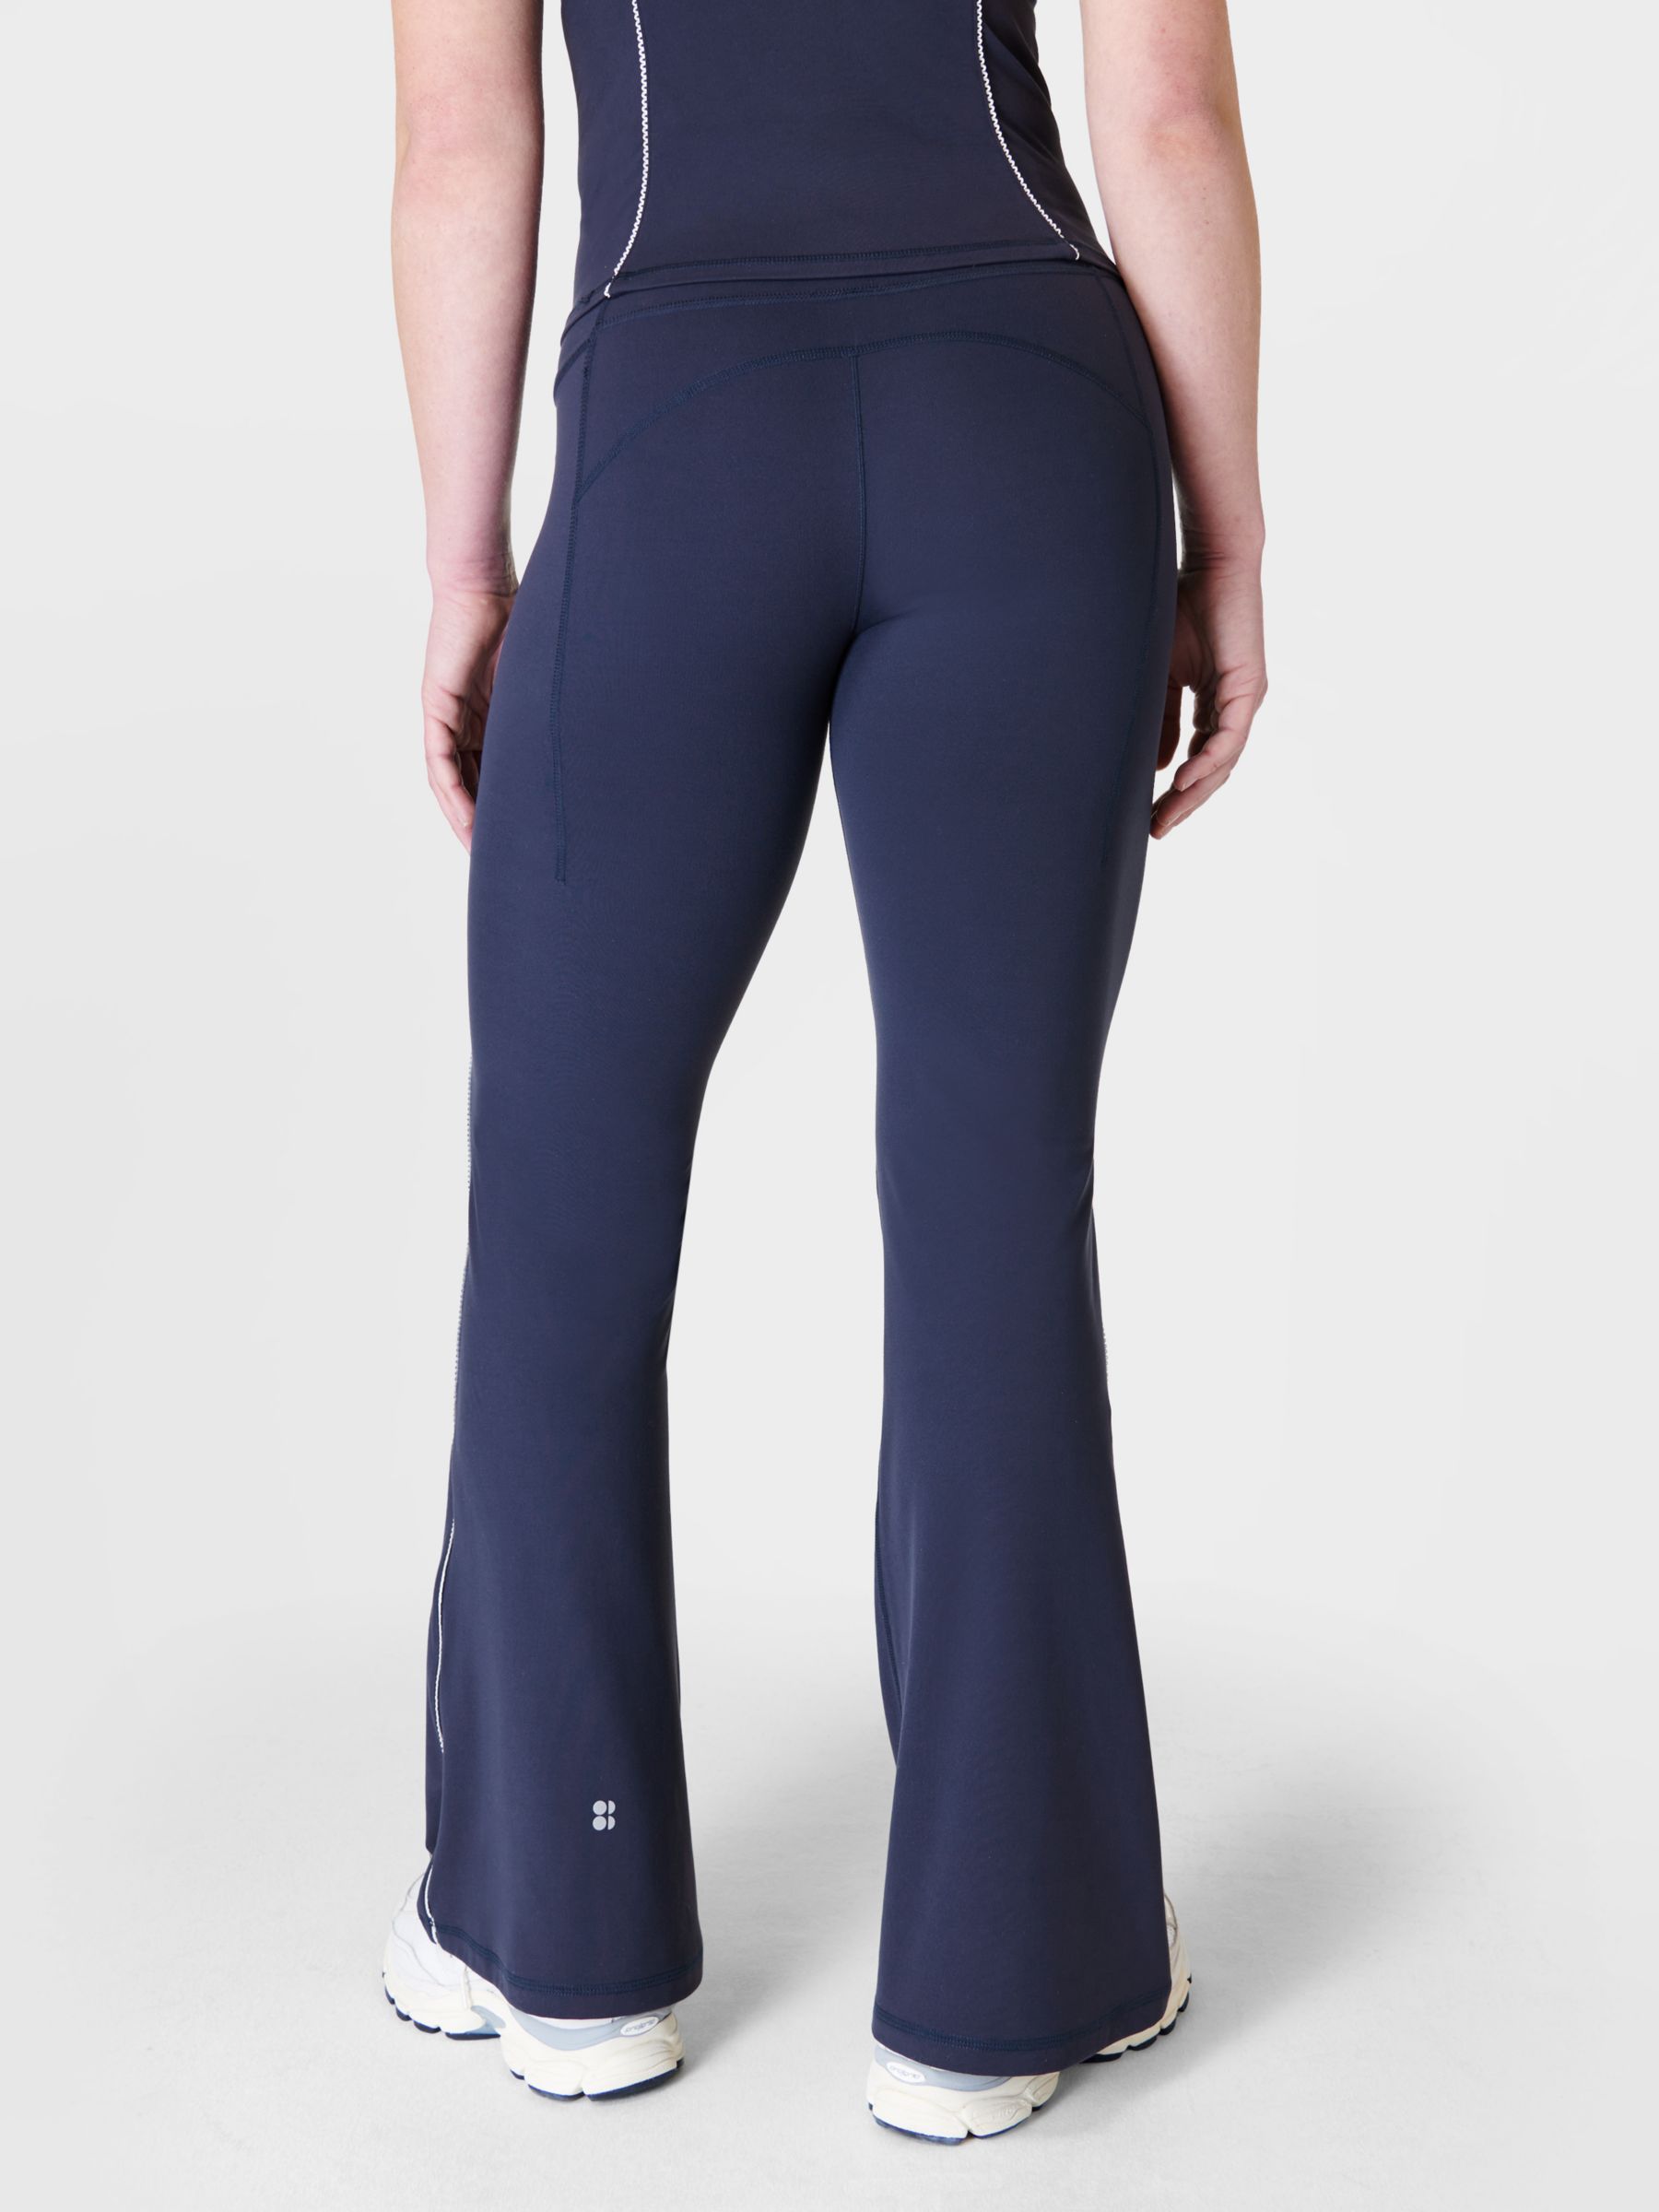 Sweaty Betty Super Soft 32 Flare Yoga Trousers, Urban Grey at